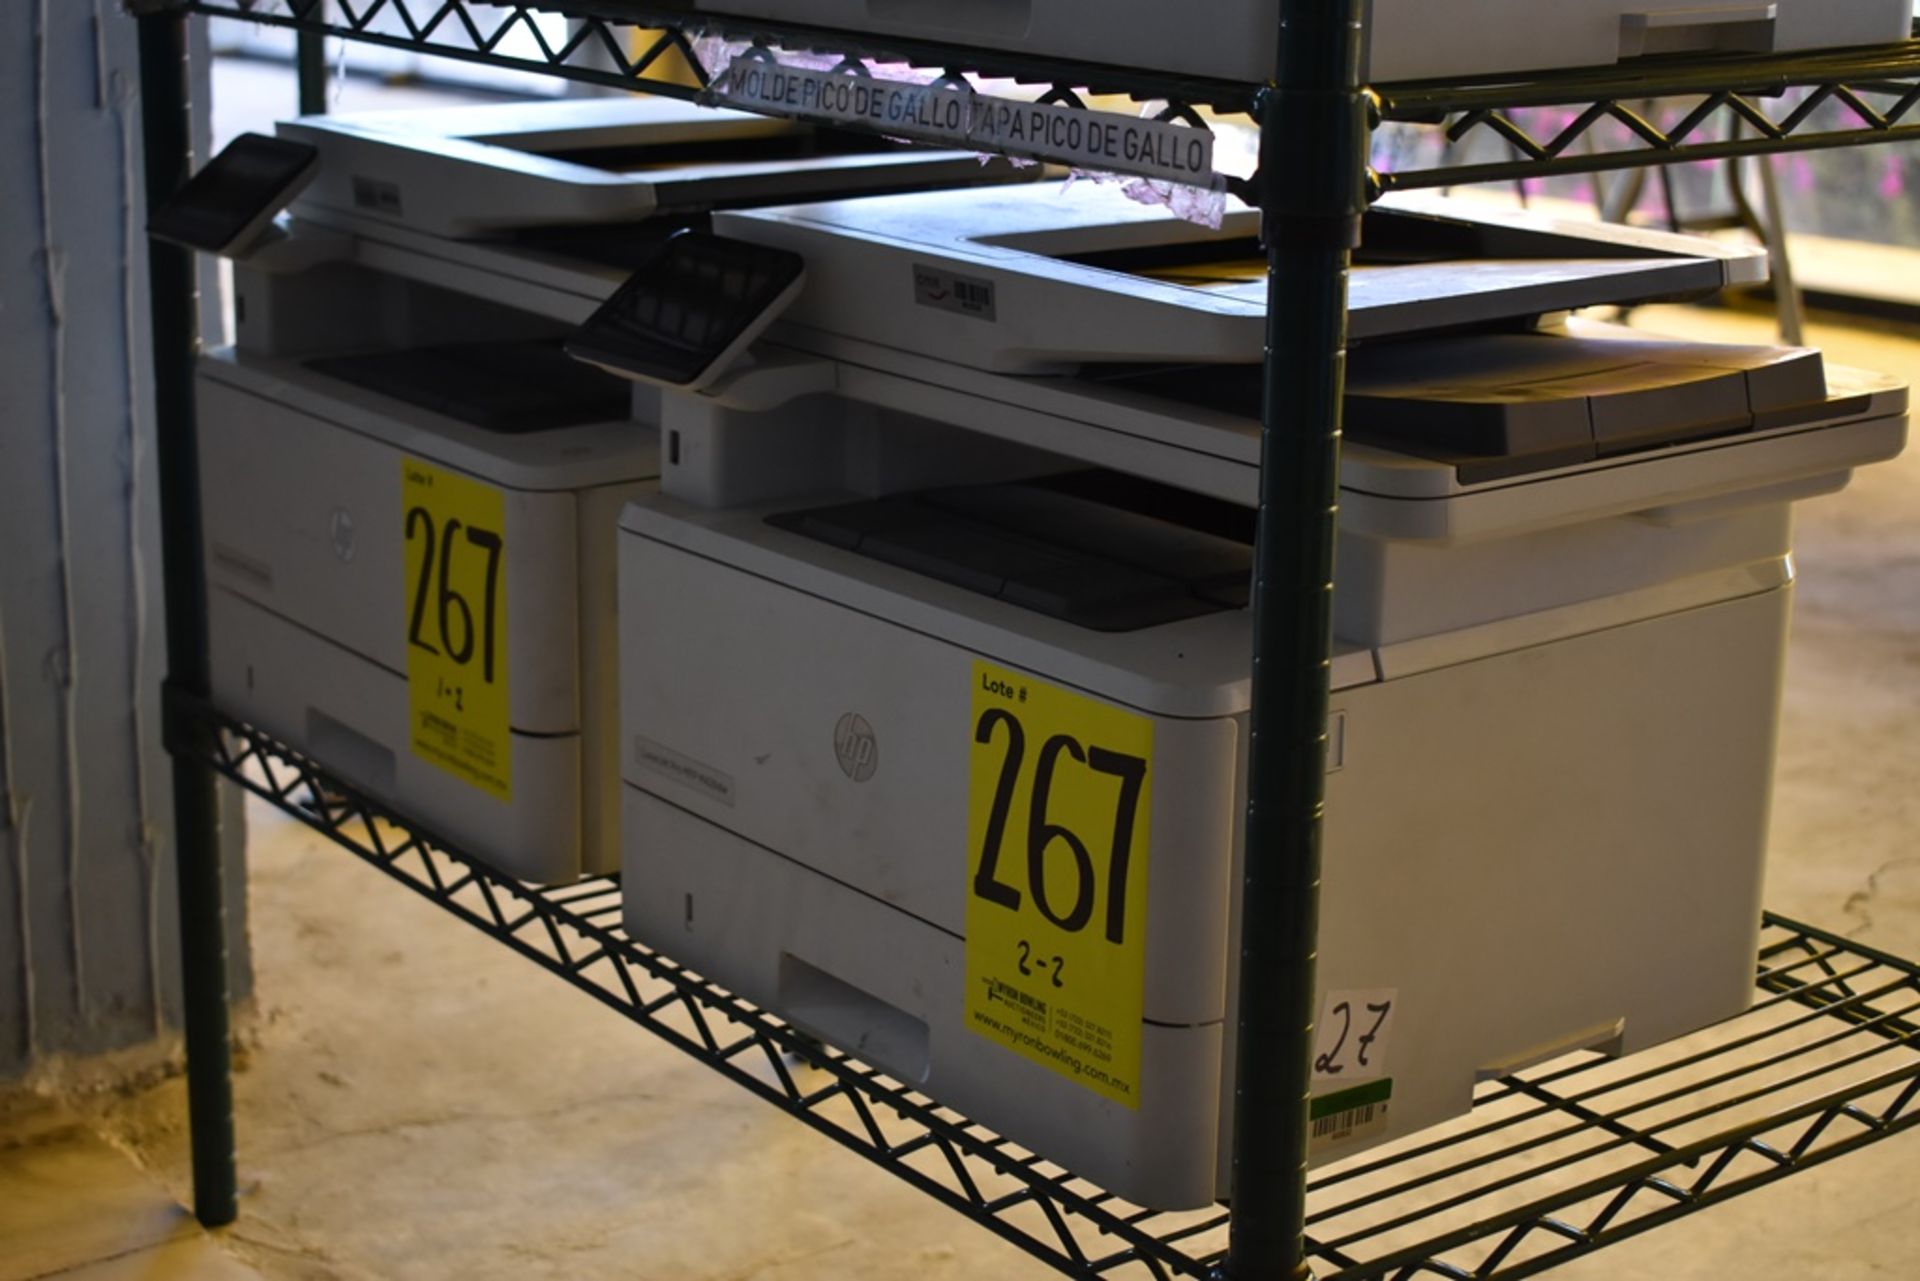 2 impresoras multifuncional marca HP, Modelo: LaserJet Pro MFP M426fdw; Series: PHB8K1N70Y - Image 4 of 10